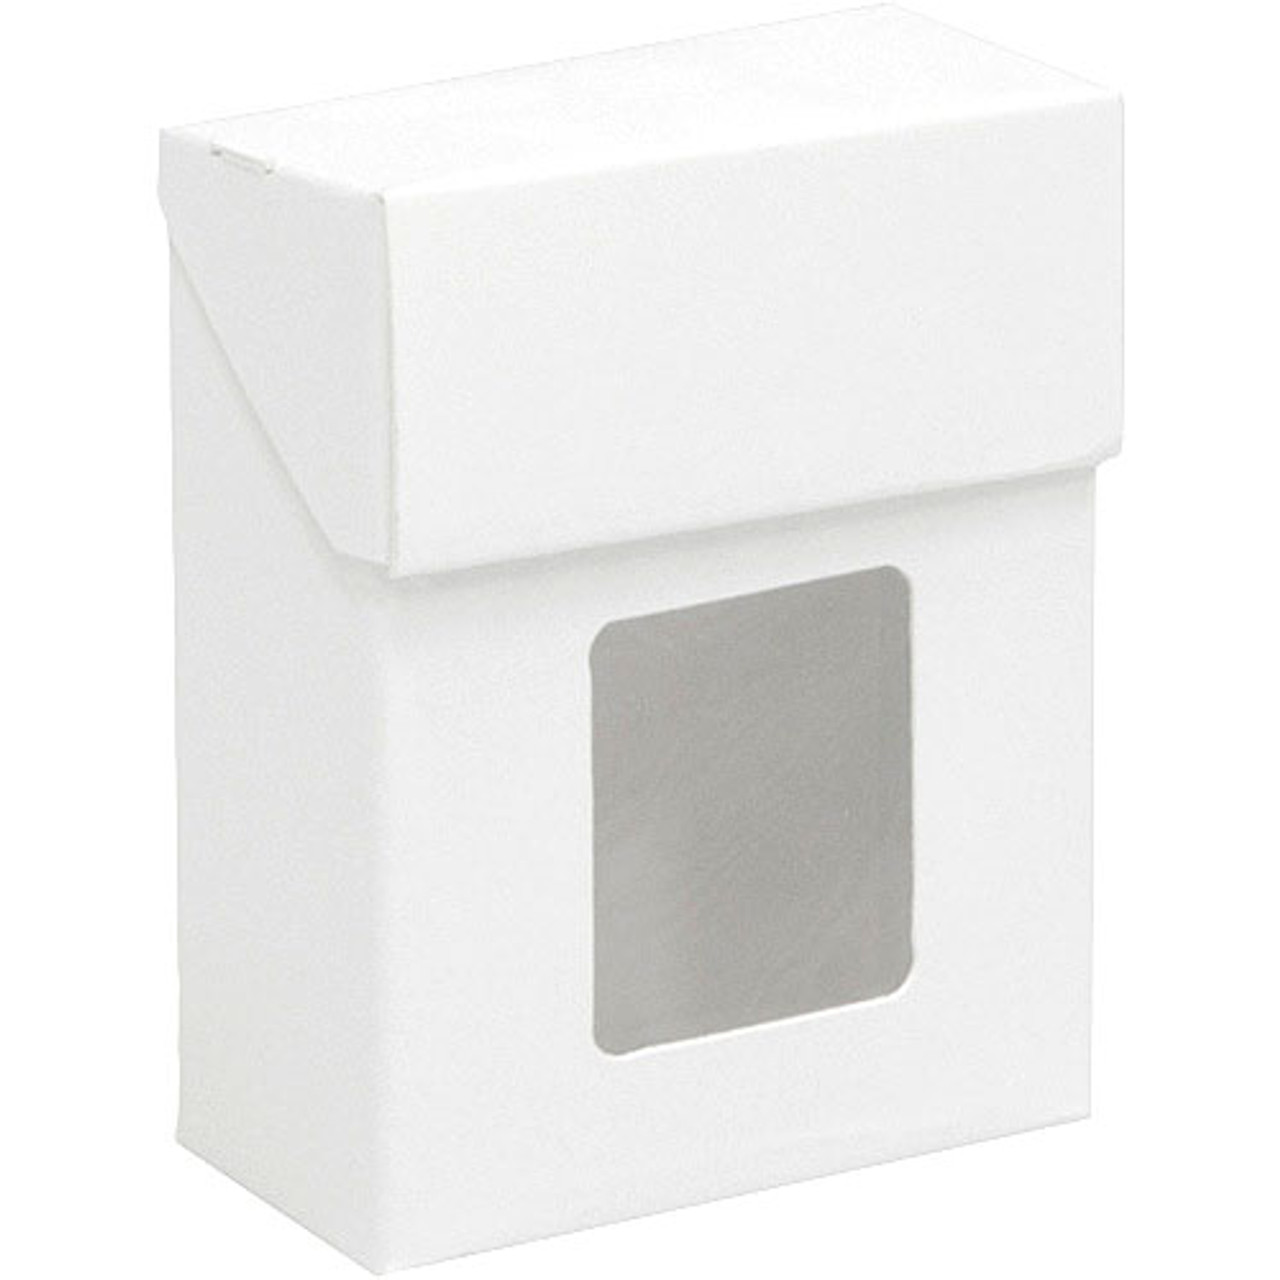 White Flip Top Gift Box 2.75" x 1 3/8" x 3.5"